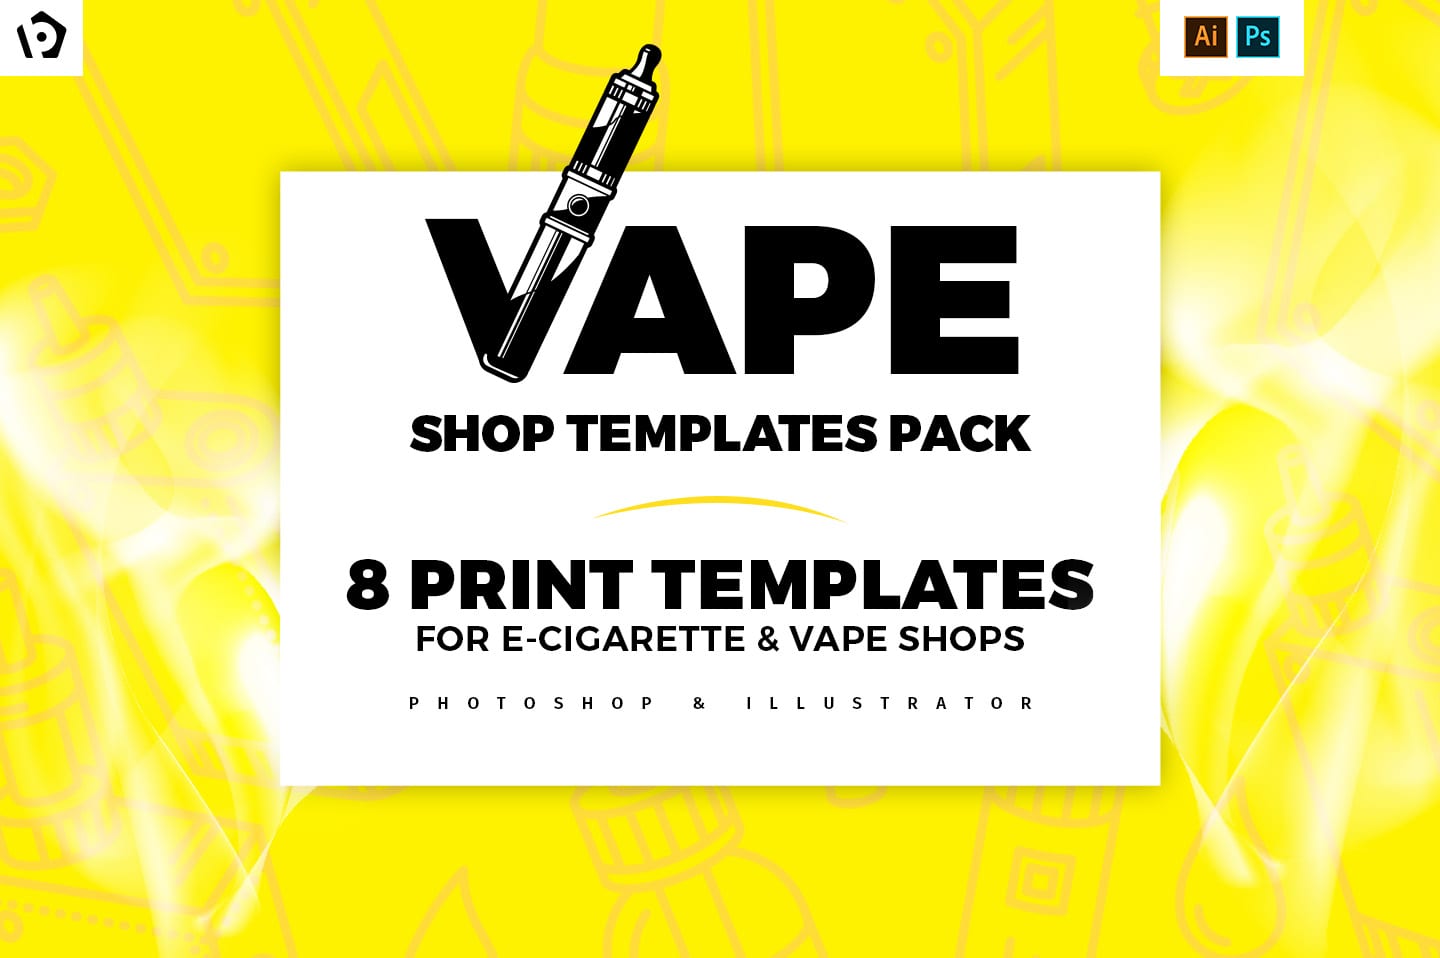 Vape Shop Templates Pack by BrandPacks